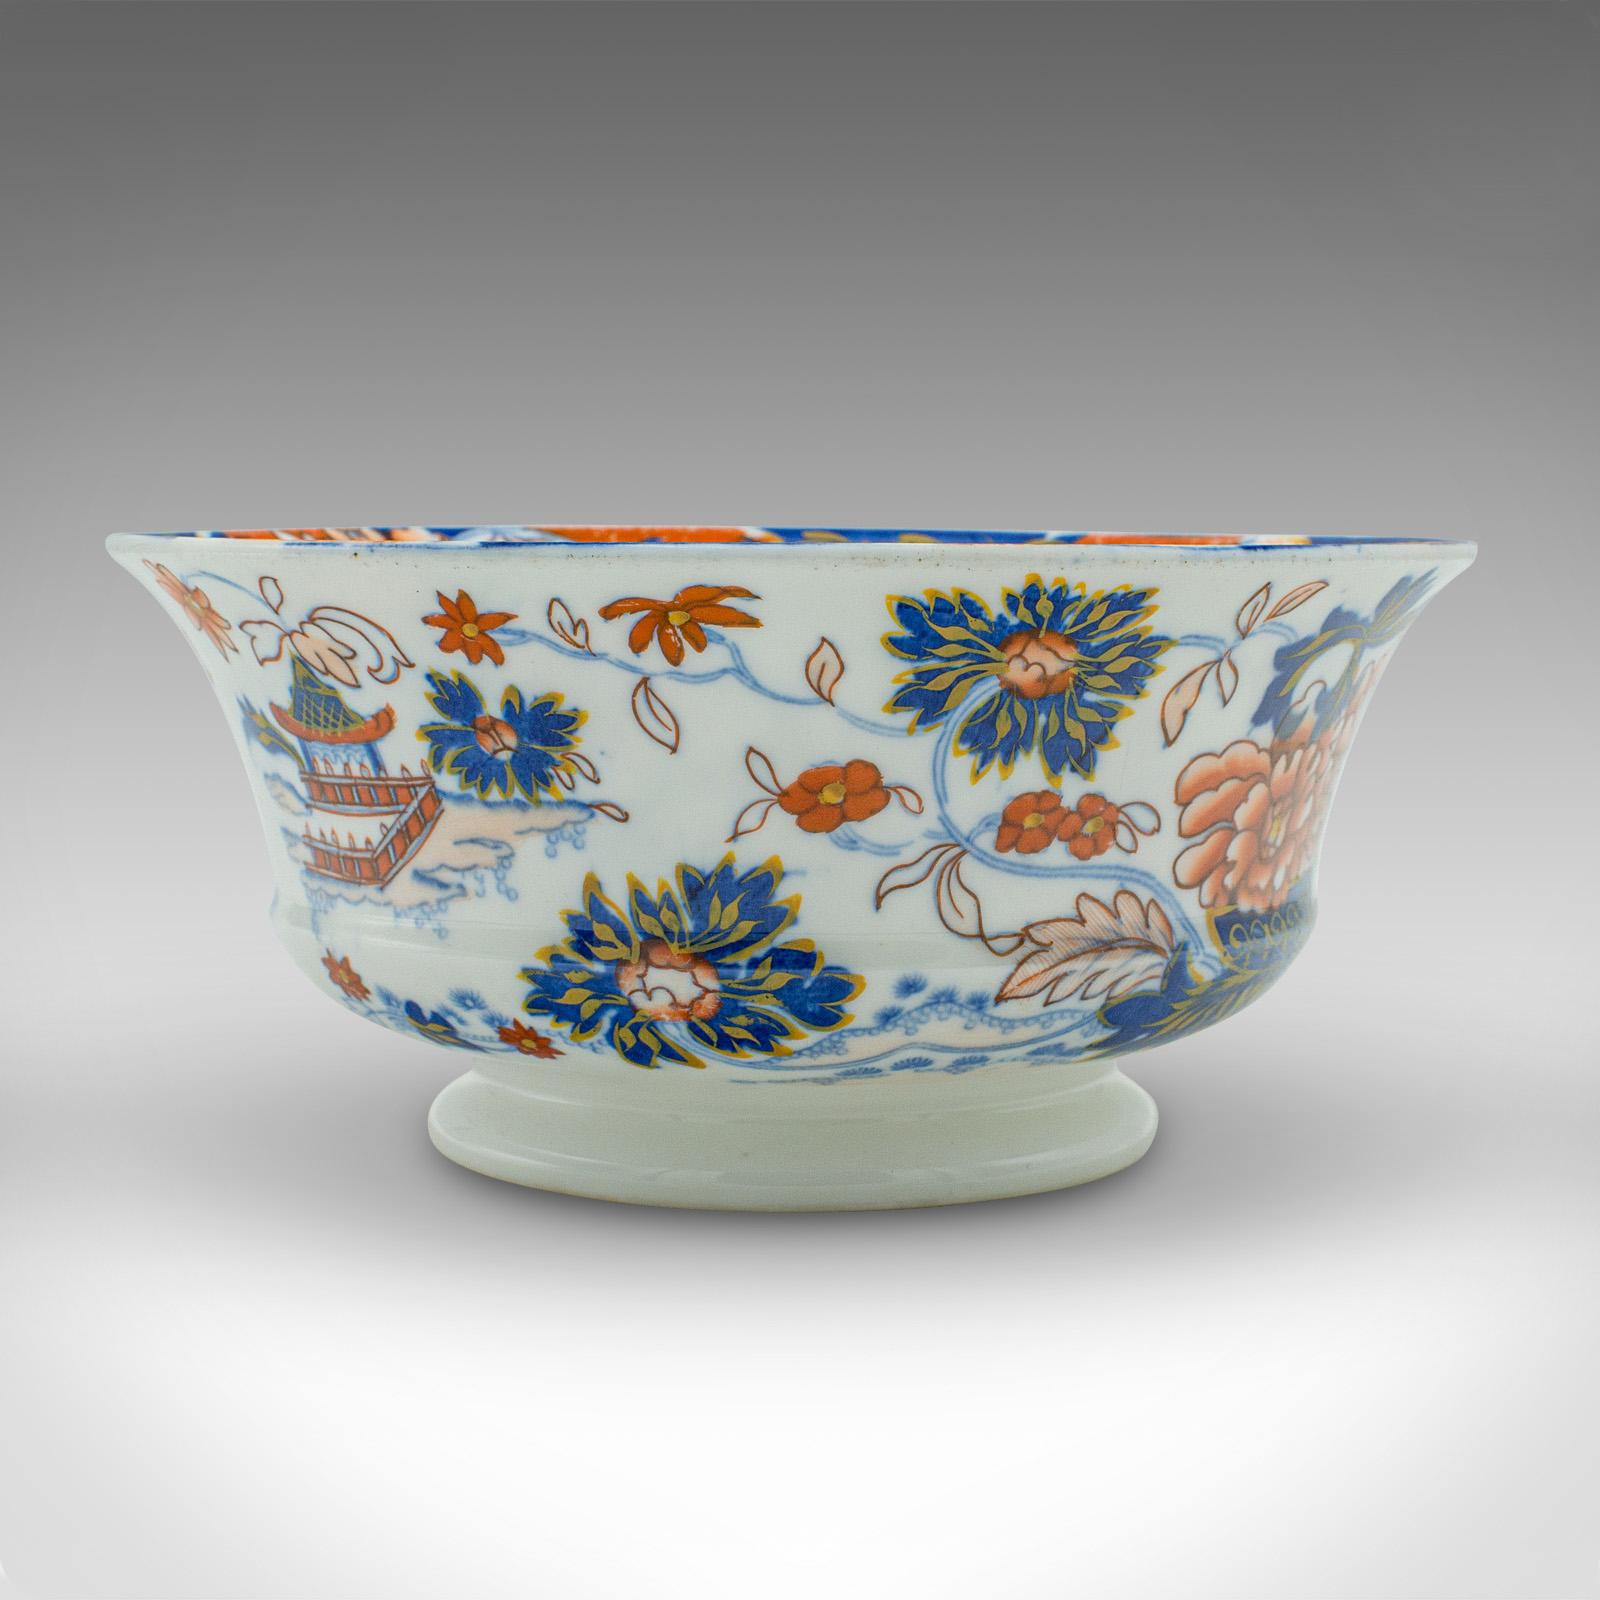 Antique Finger Bowl, English, Decorative Ceramic Serving Dish, Victorian, C.1900 In Good Condition For Sale In Hele, Devon, GB